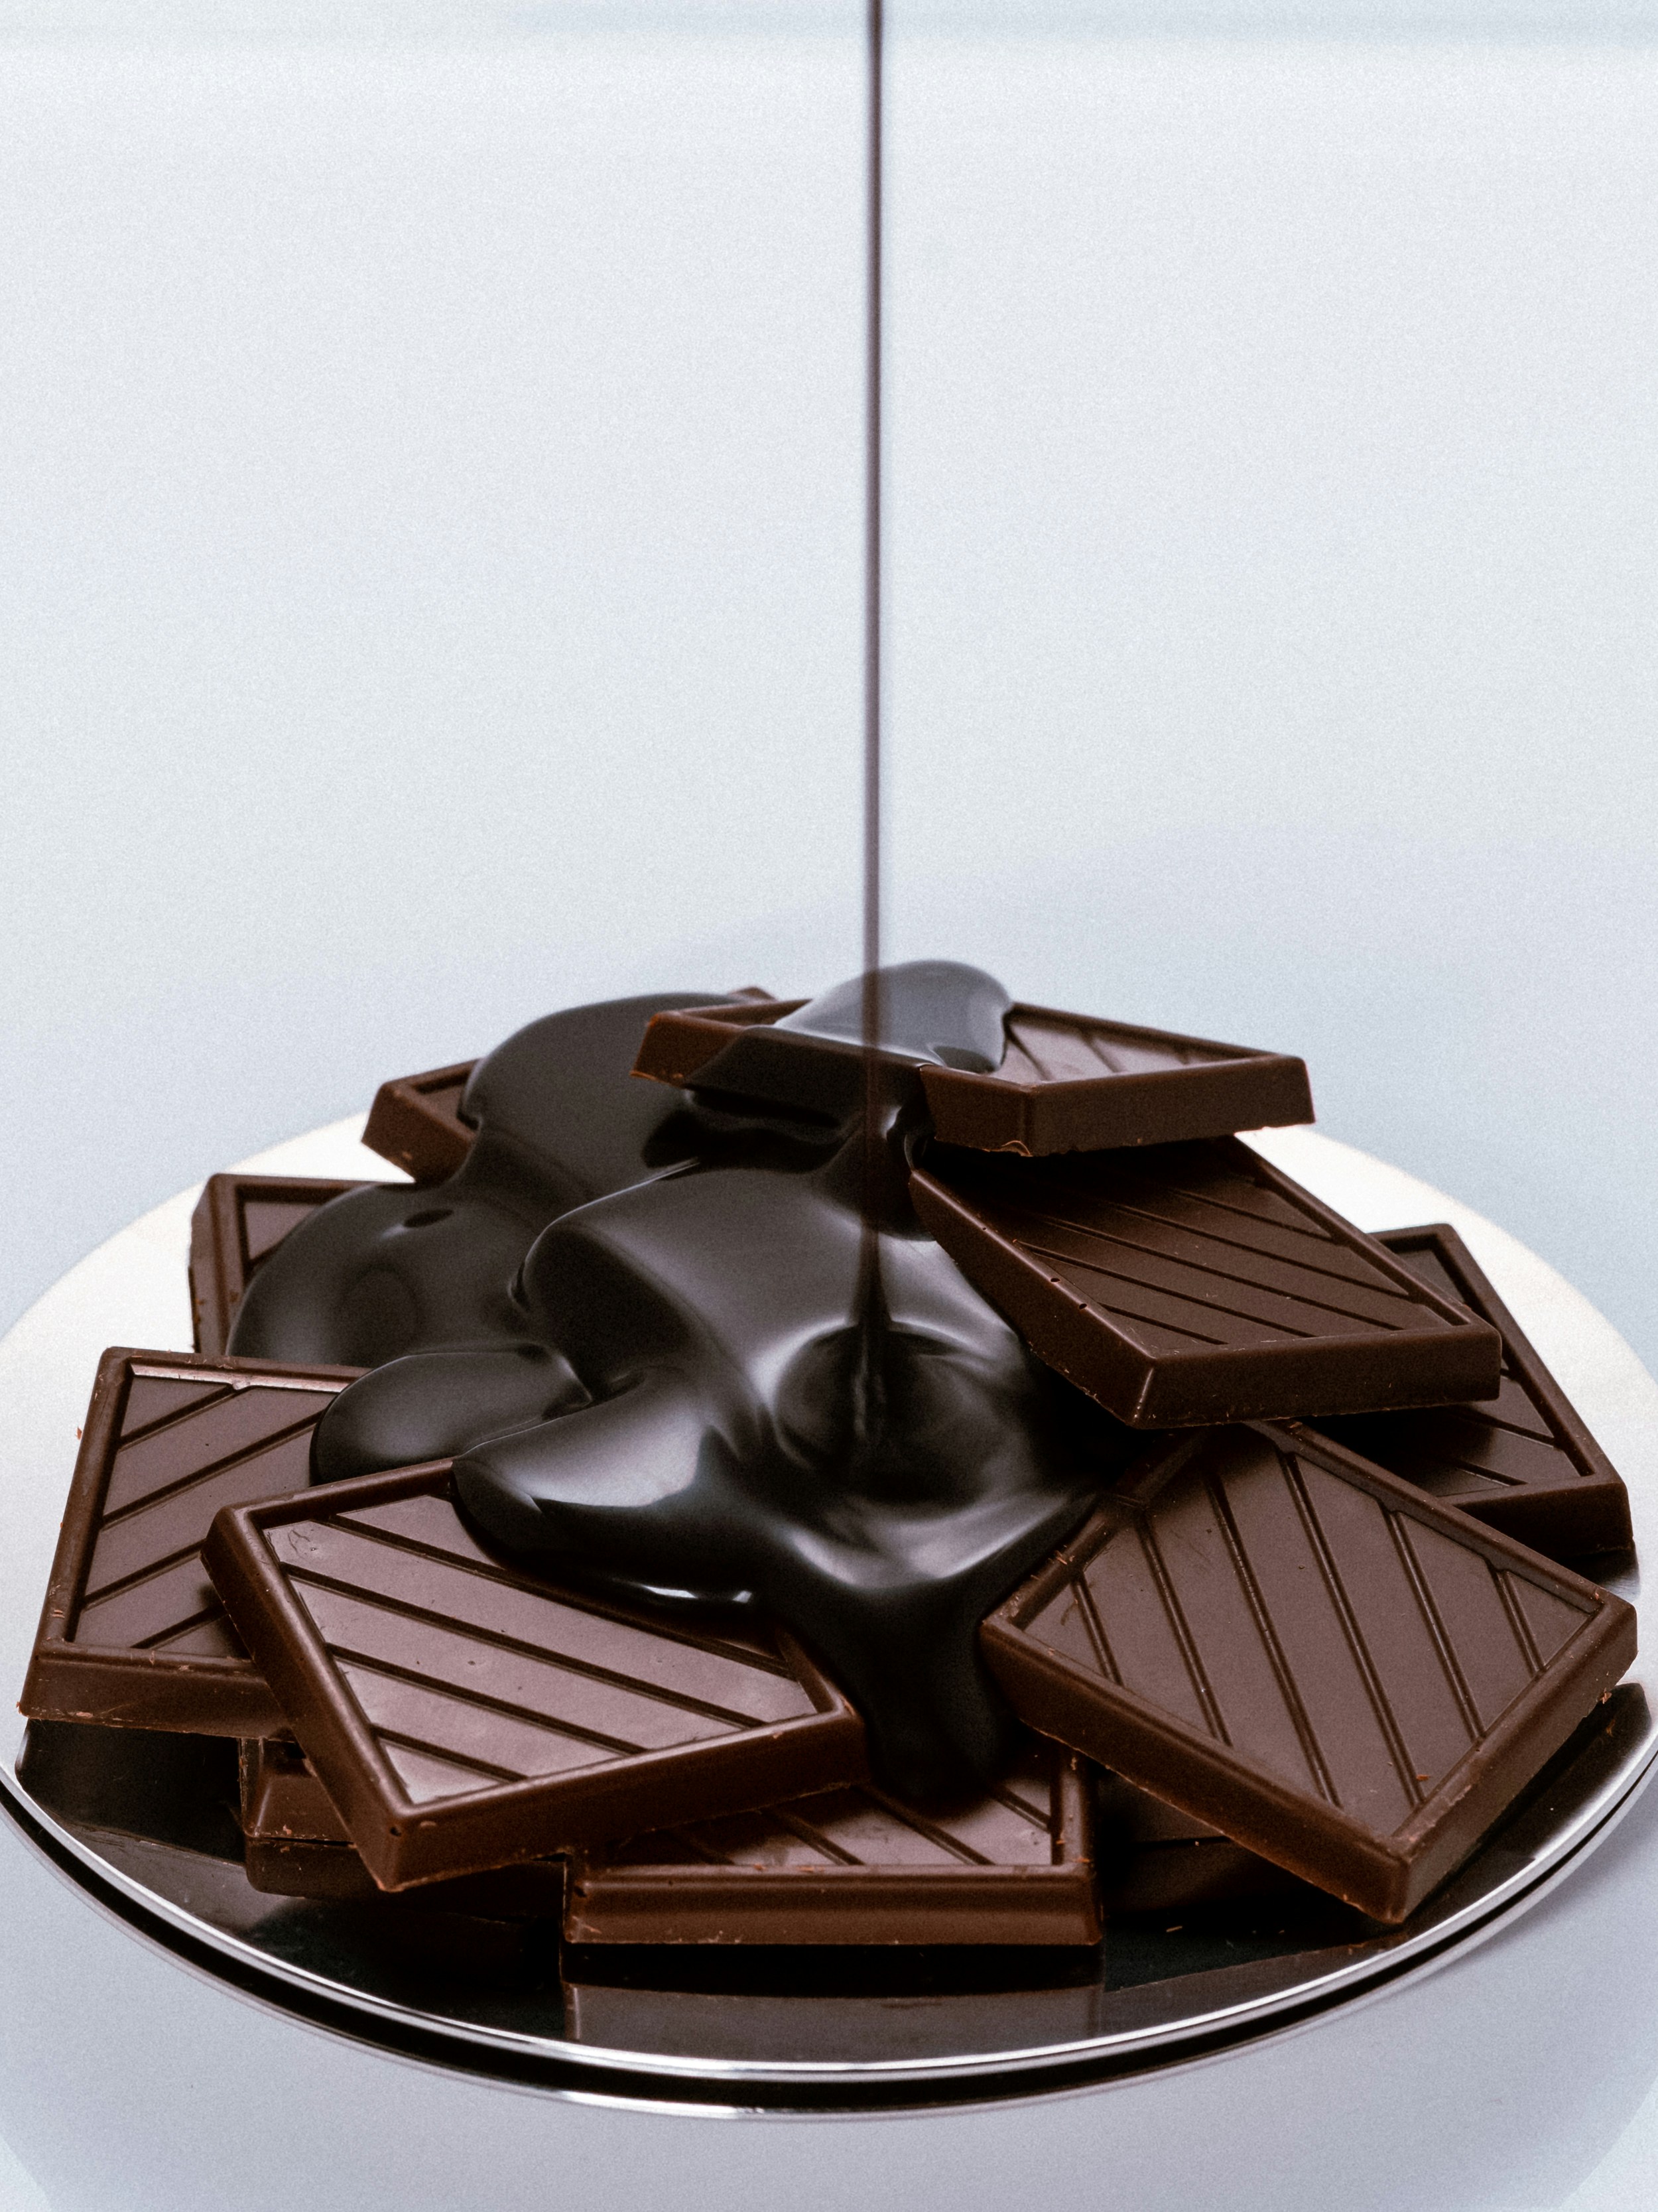 Morceau de chocolat recouverts de chocolat fondu